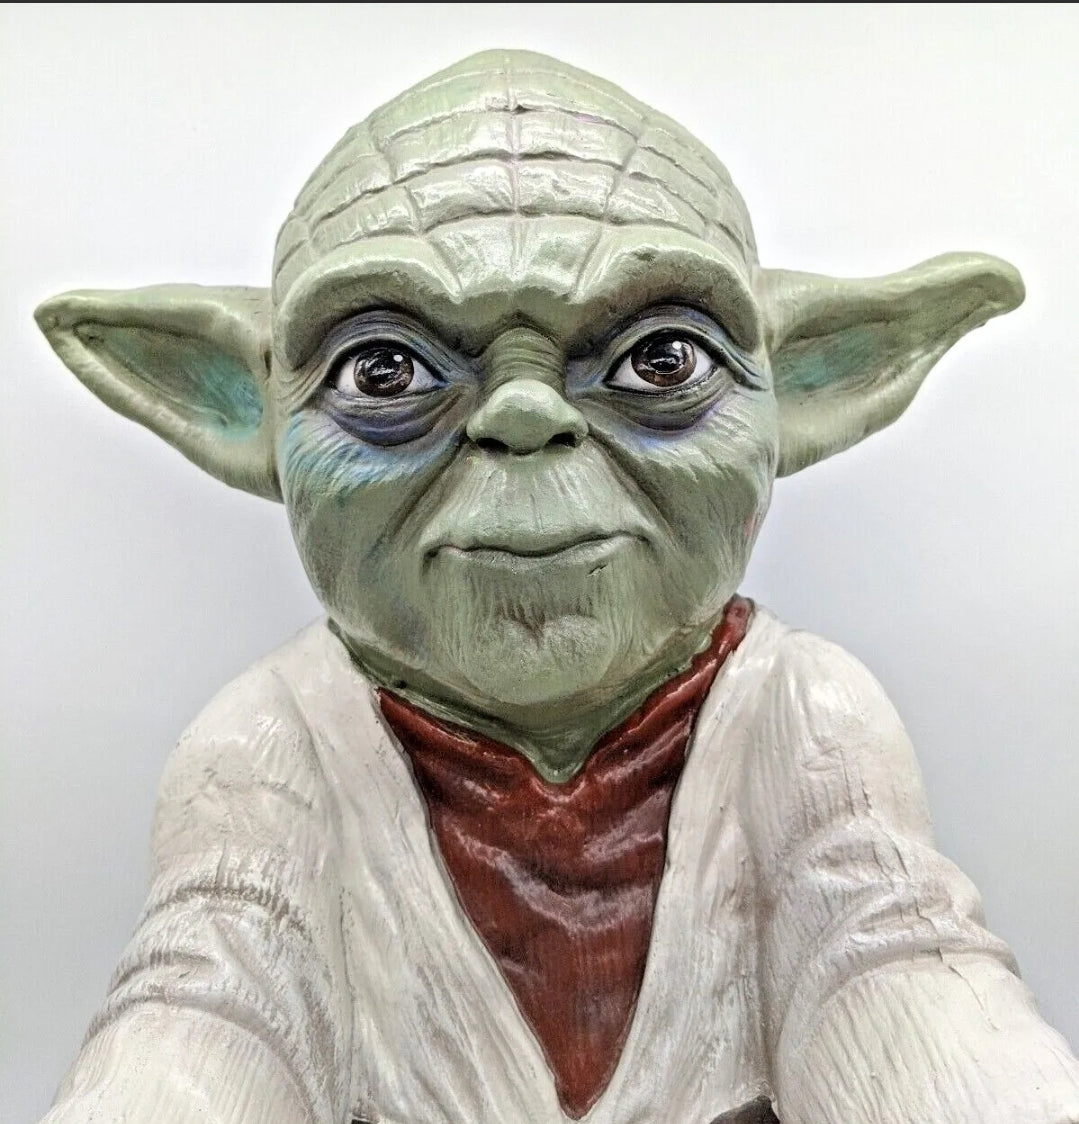 Disney Star Wars 20" Yoda Figure Candy Bowl Holder (2011)